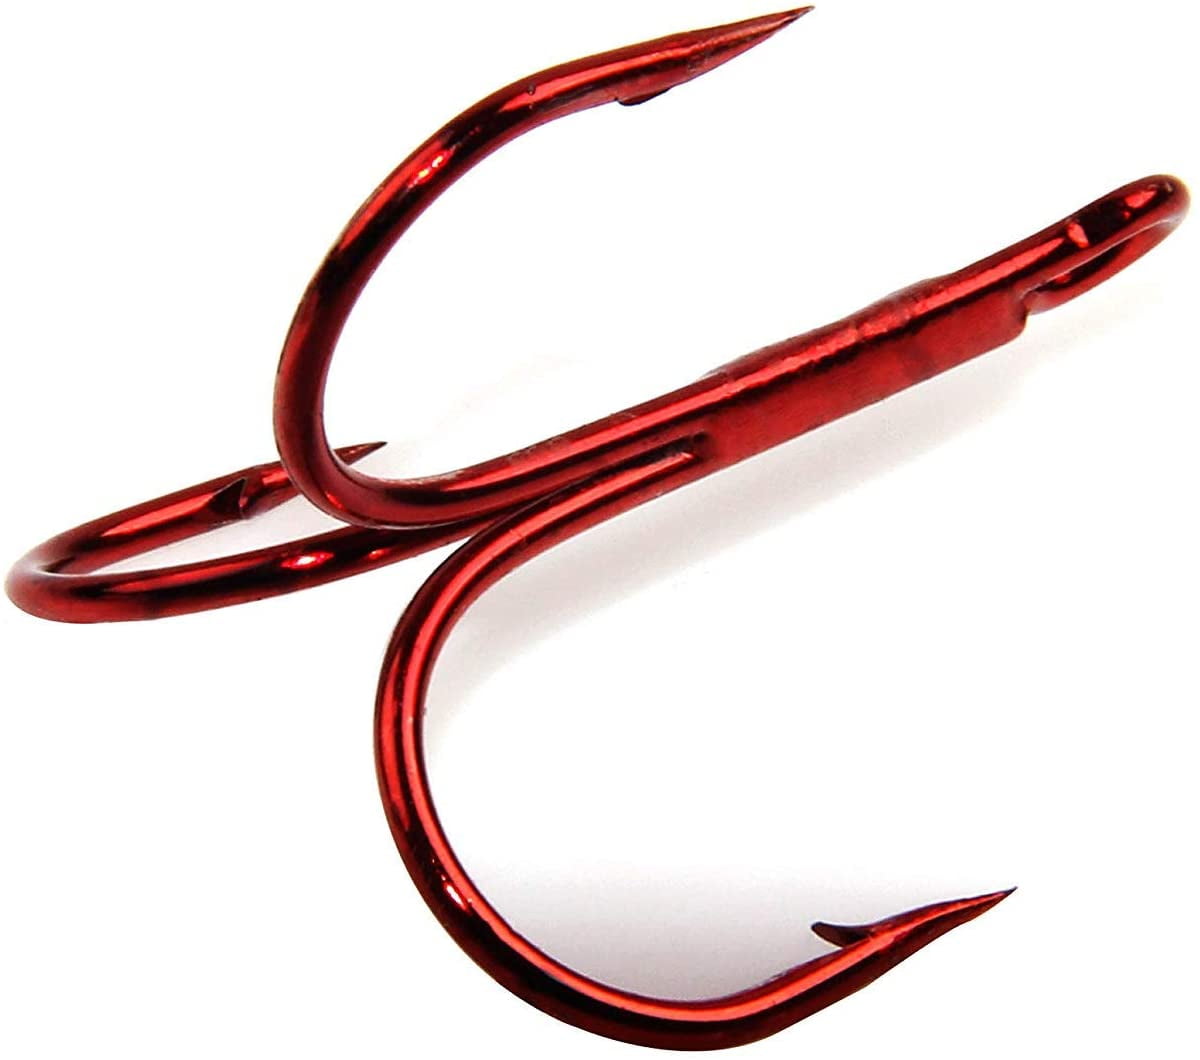 100 Pcs Fishing Hook Sharpened Treble Hooks 1/0# 2/0# 2/4/6/8/10/12/14 Red Hooks 